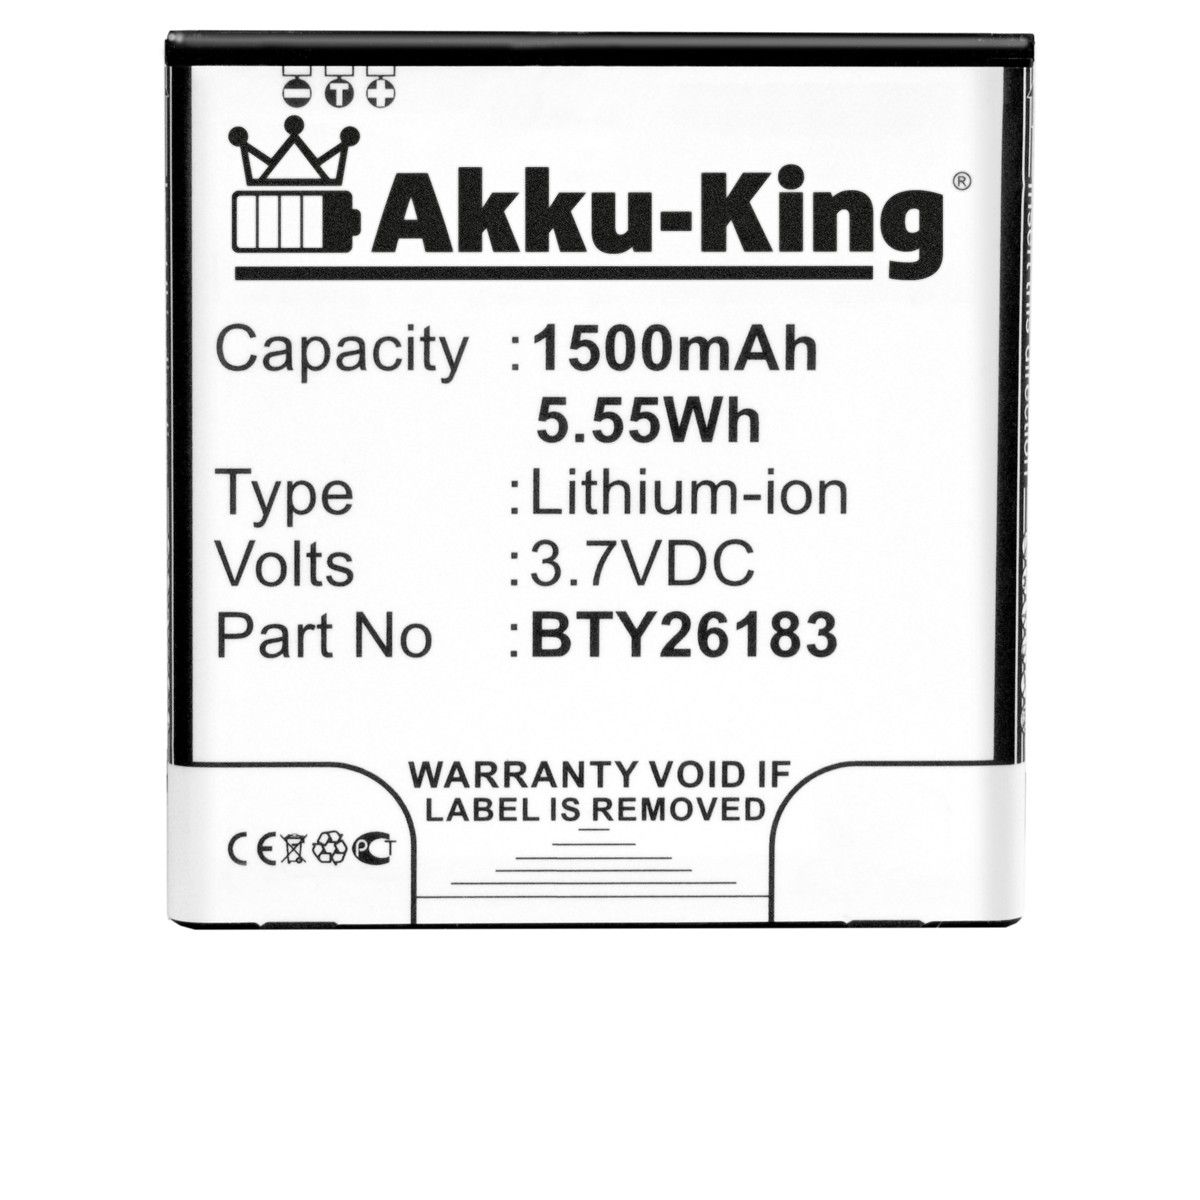 AKKU-KING Akku kompatibel BTY26183 3.7 Volt, 1500mAh Elson Li-Ion mit Handy-Akku